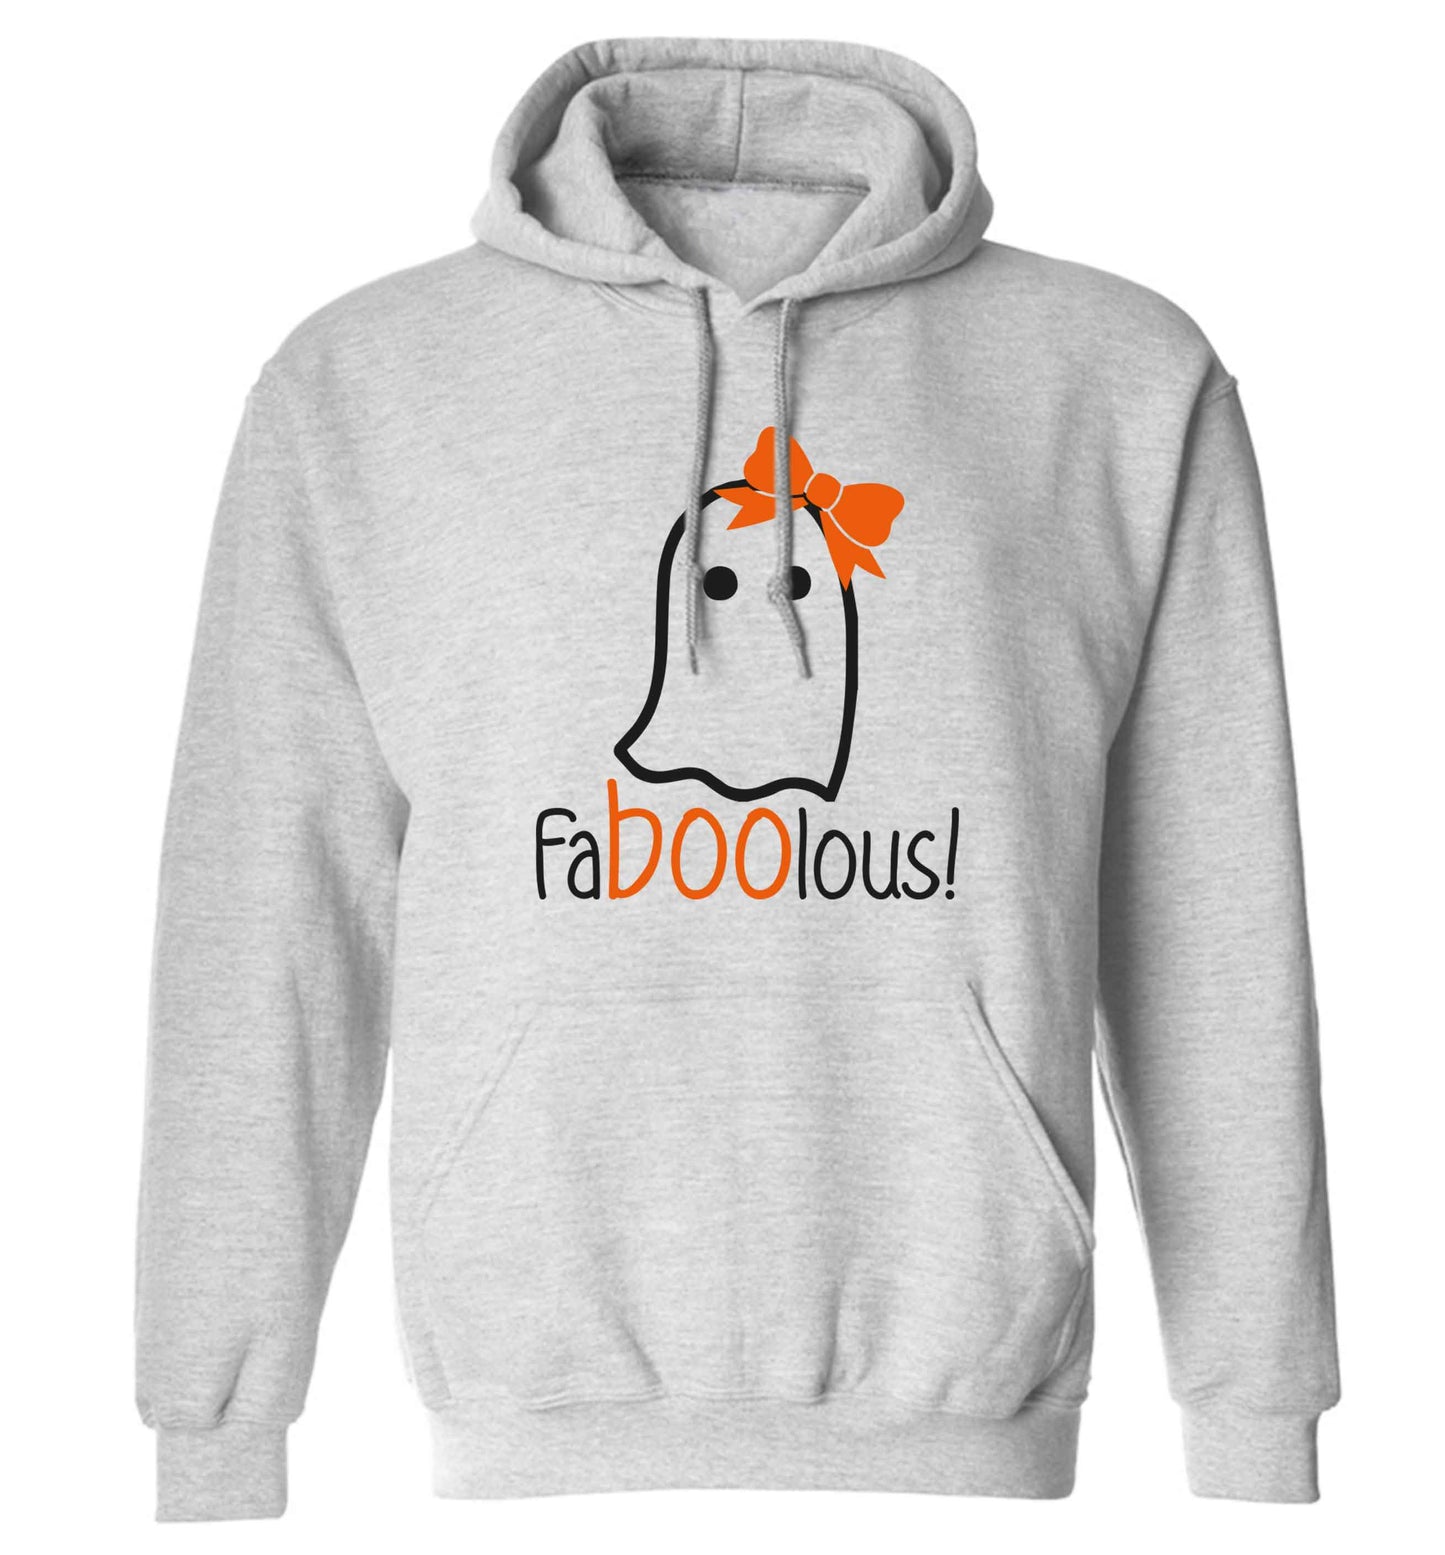 Faboolous ghost adults unisex grey hoodie 2XL